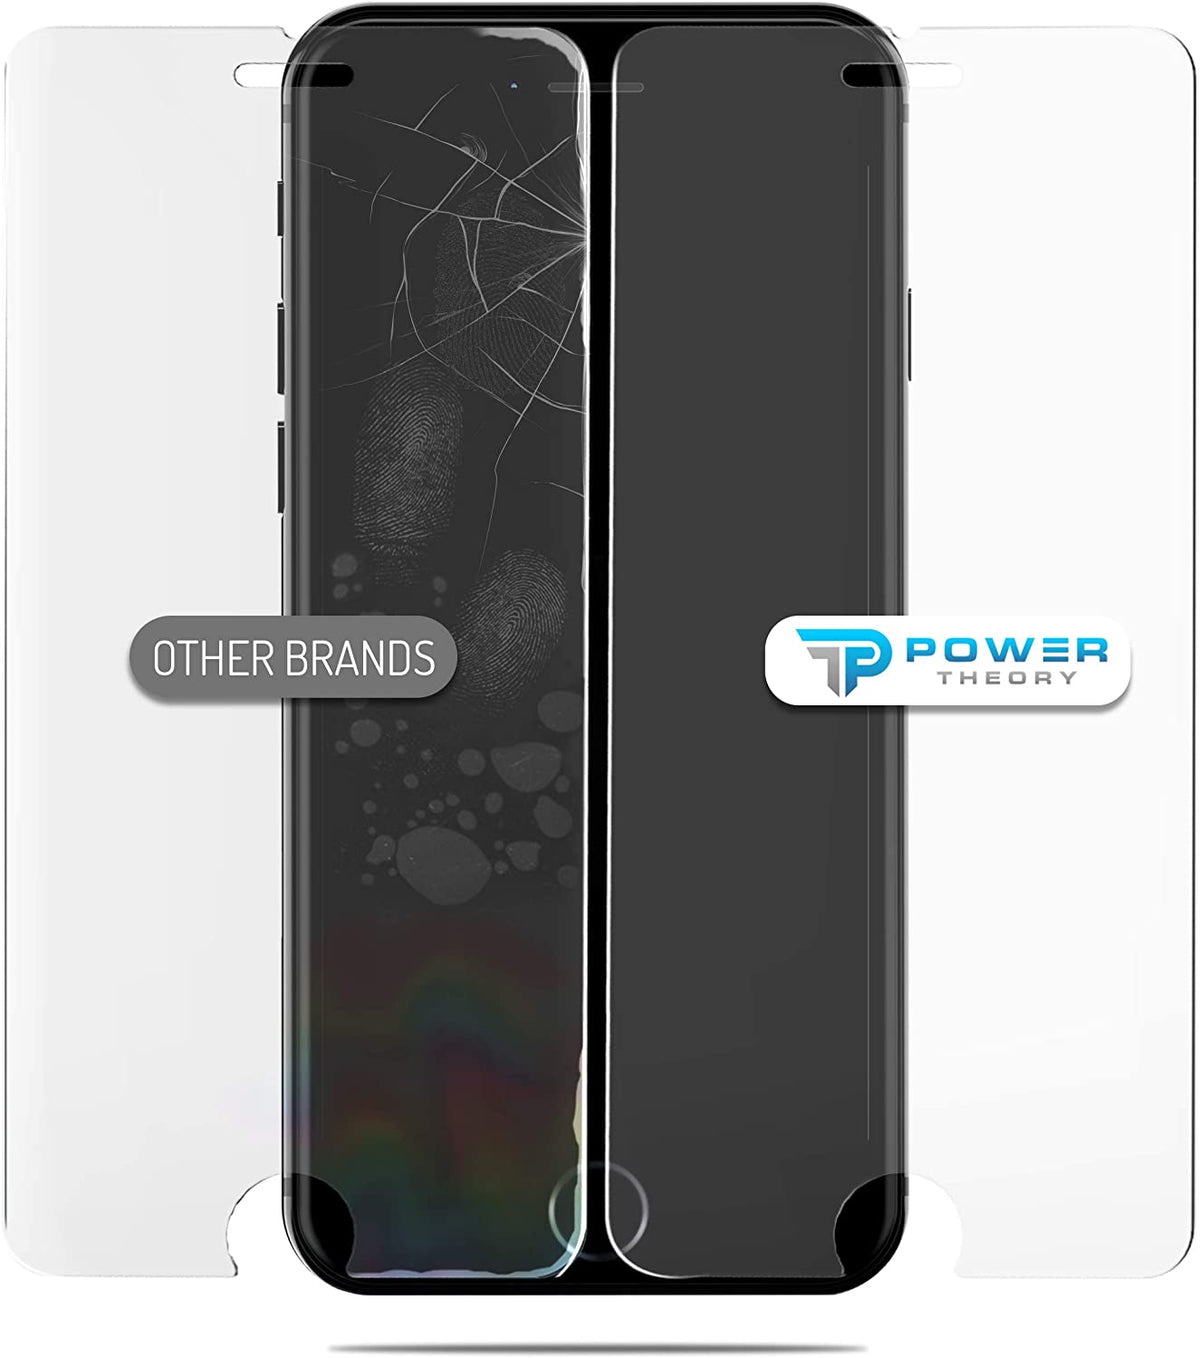 Power Theory Schutzfolie kompatibel mit iPhone 8/iPhone 7 [2 Stück] Cover